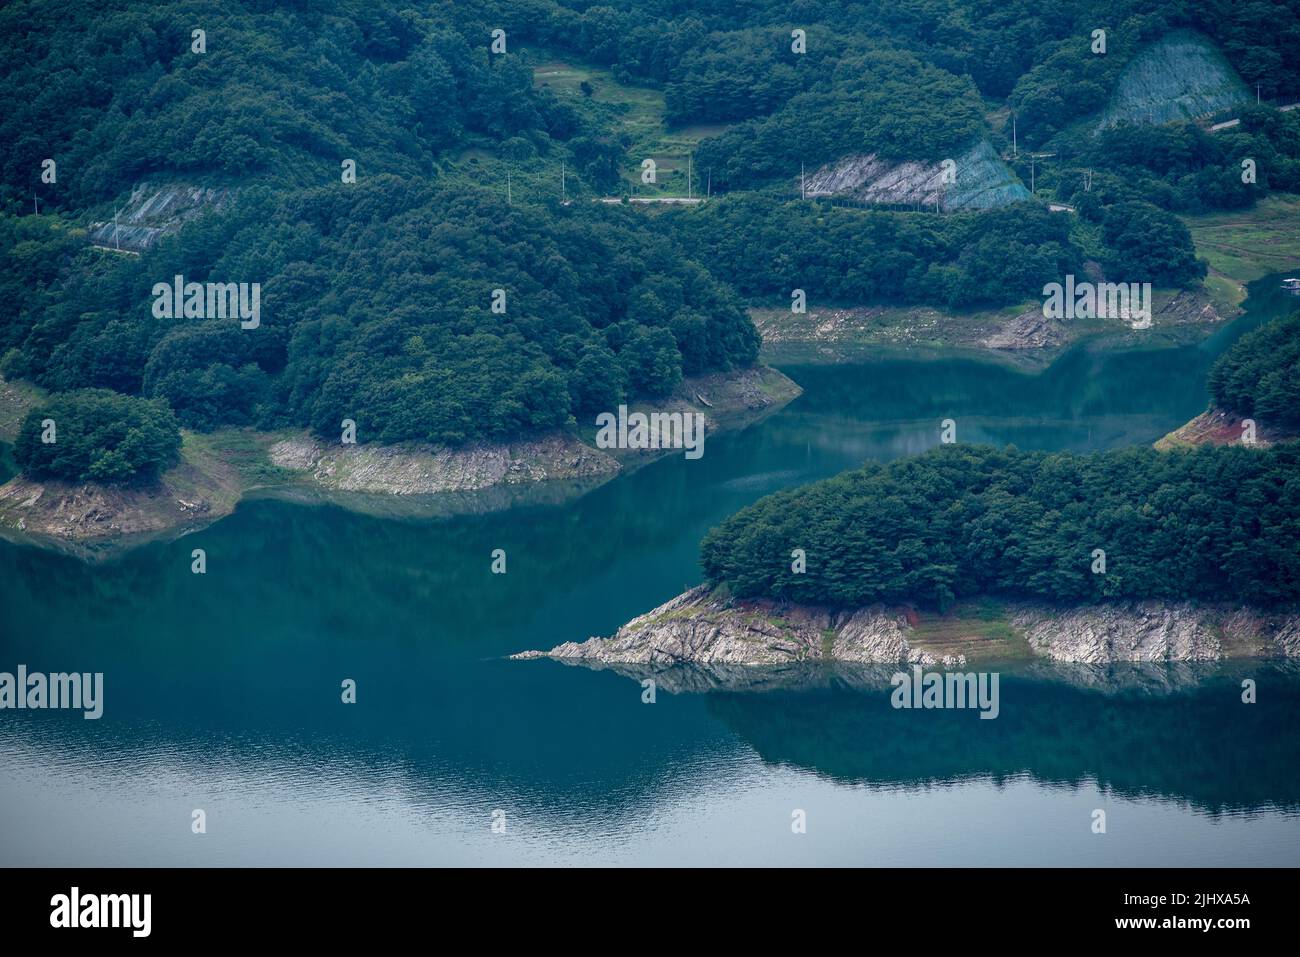 Cheongpung Lake near Jecheon city in Chungcheongbukdo province in South Korea Stock Photo